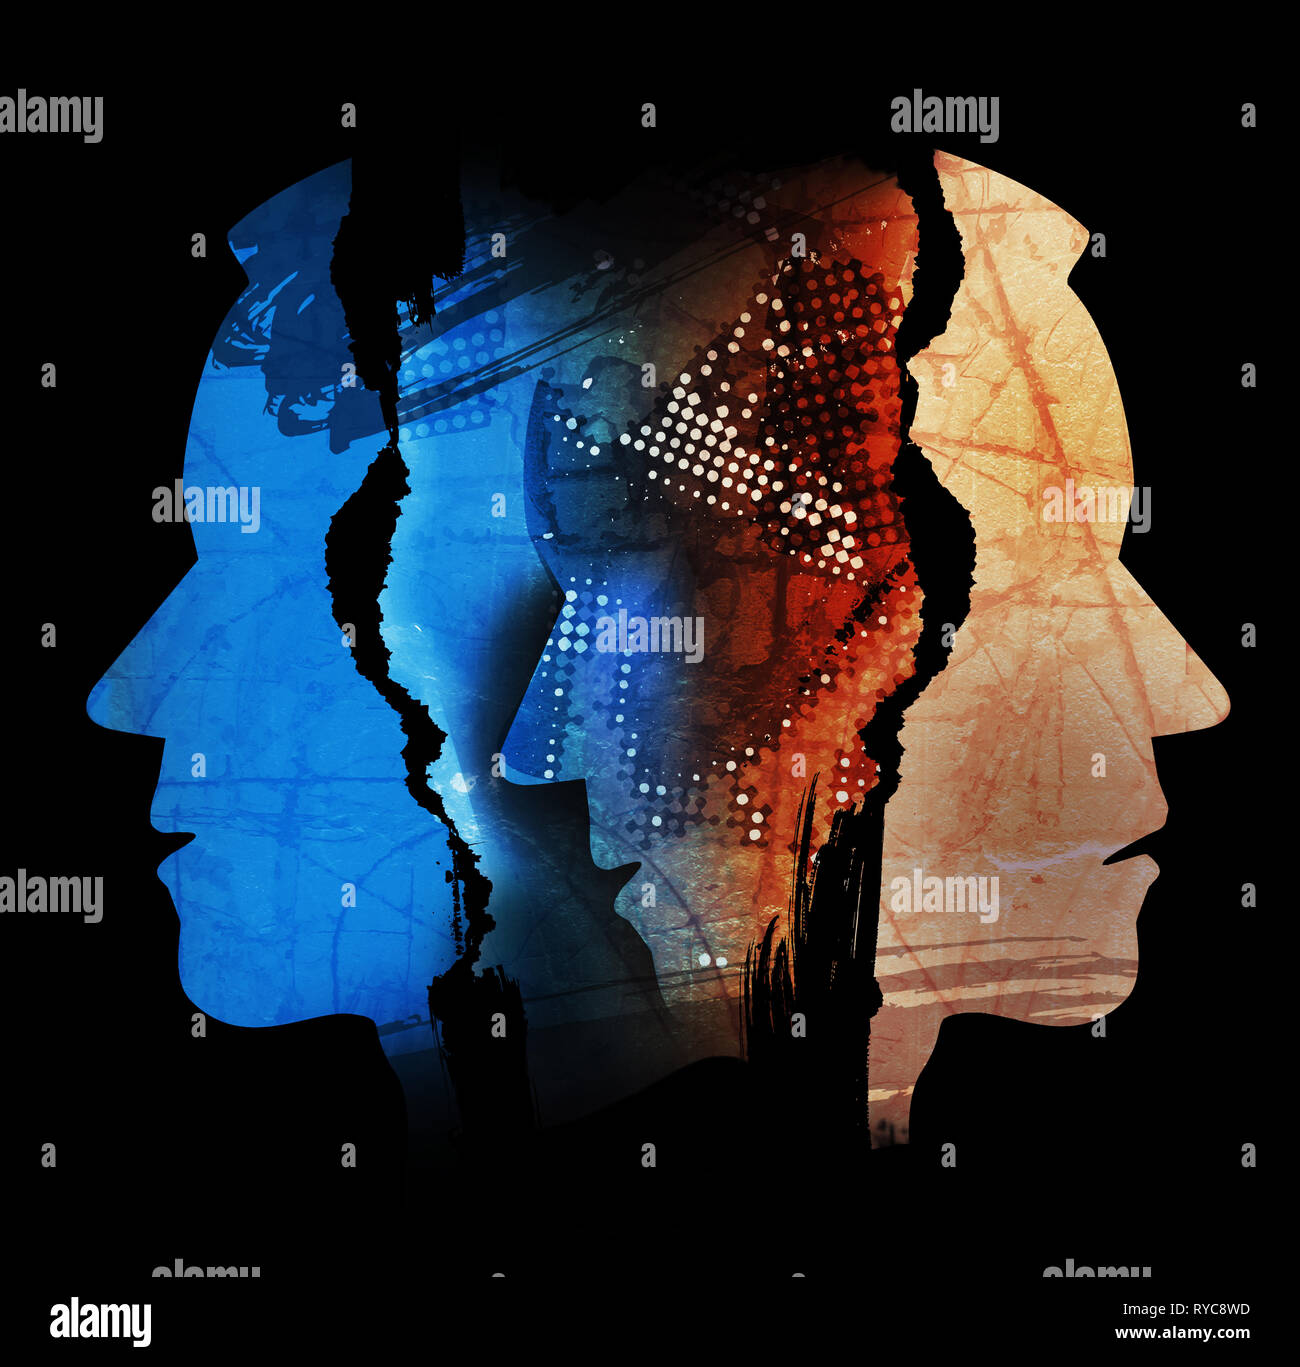 Schizophrenia, depression, male heads. Male heads, stylized silhouettes shown in profile. Concept symbolizing schizophrenia, depression. Stock Photo